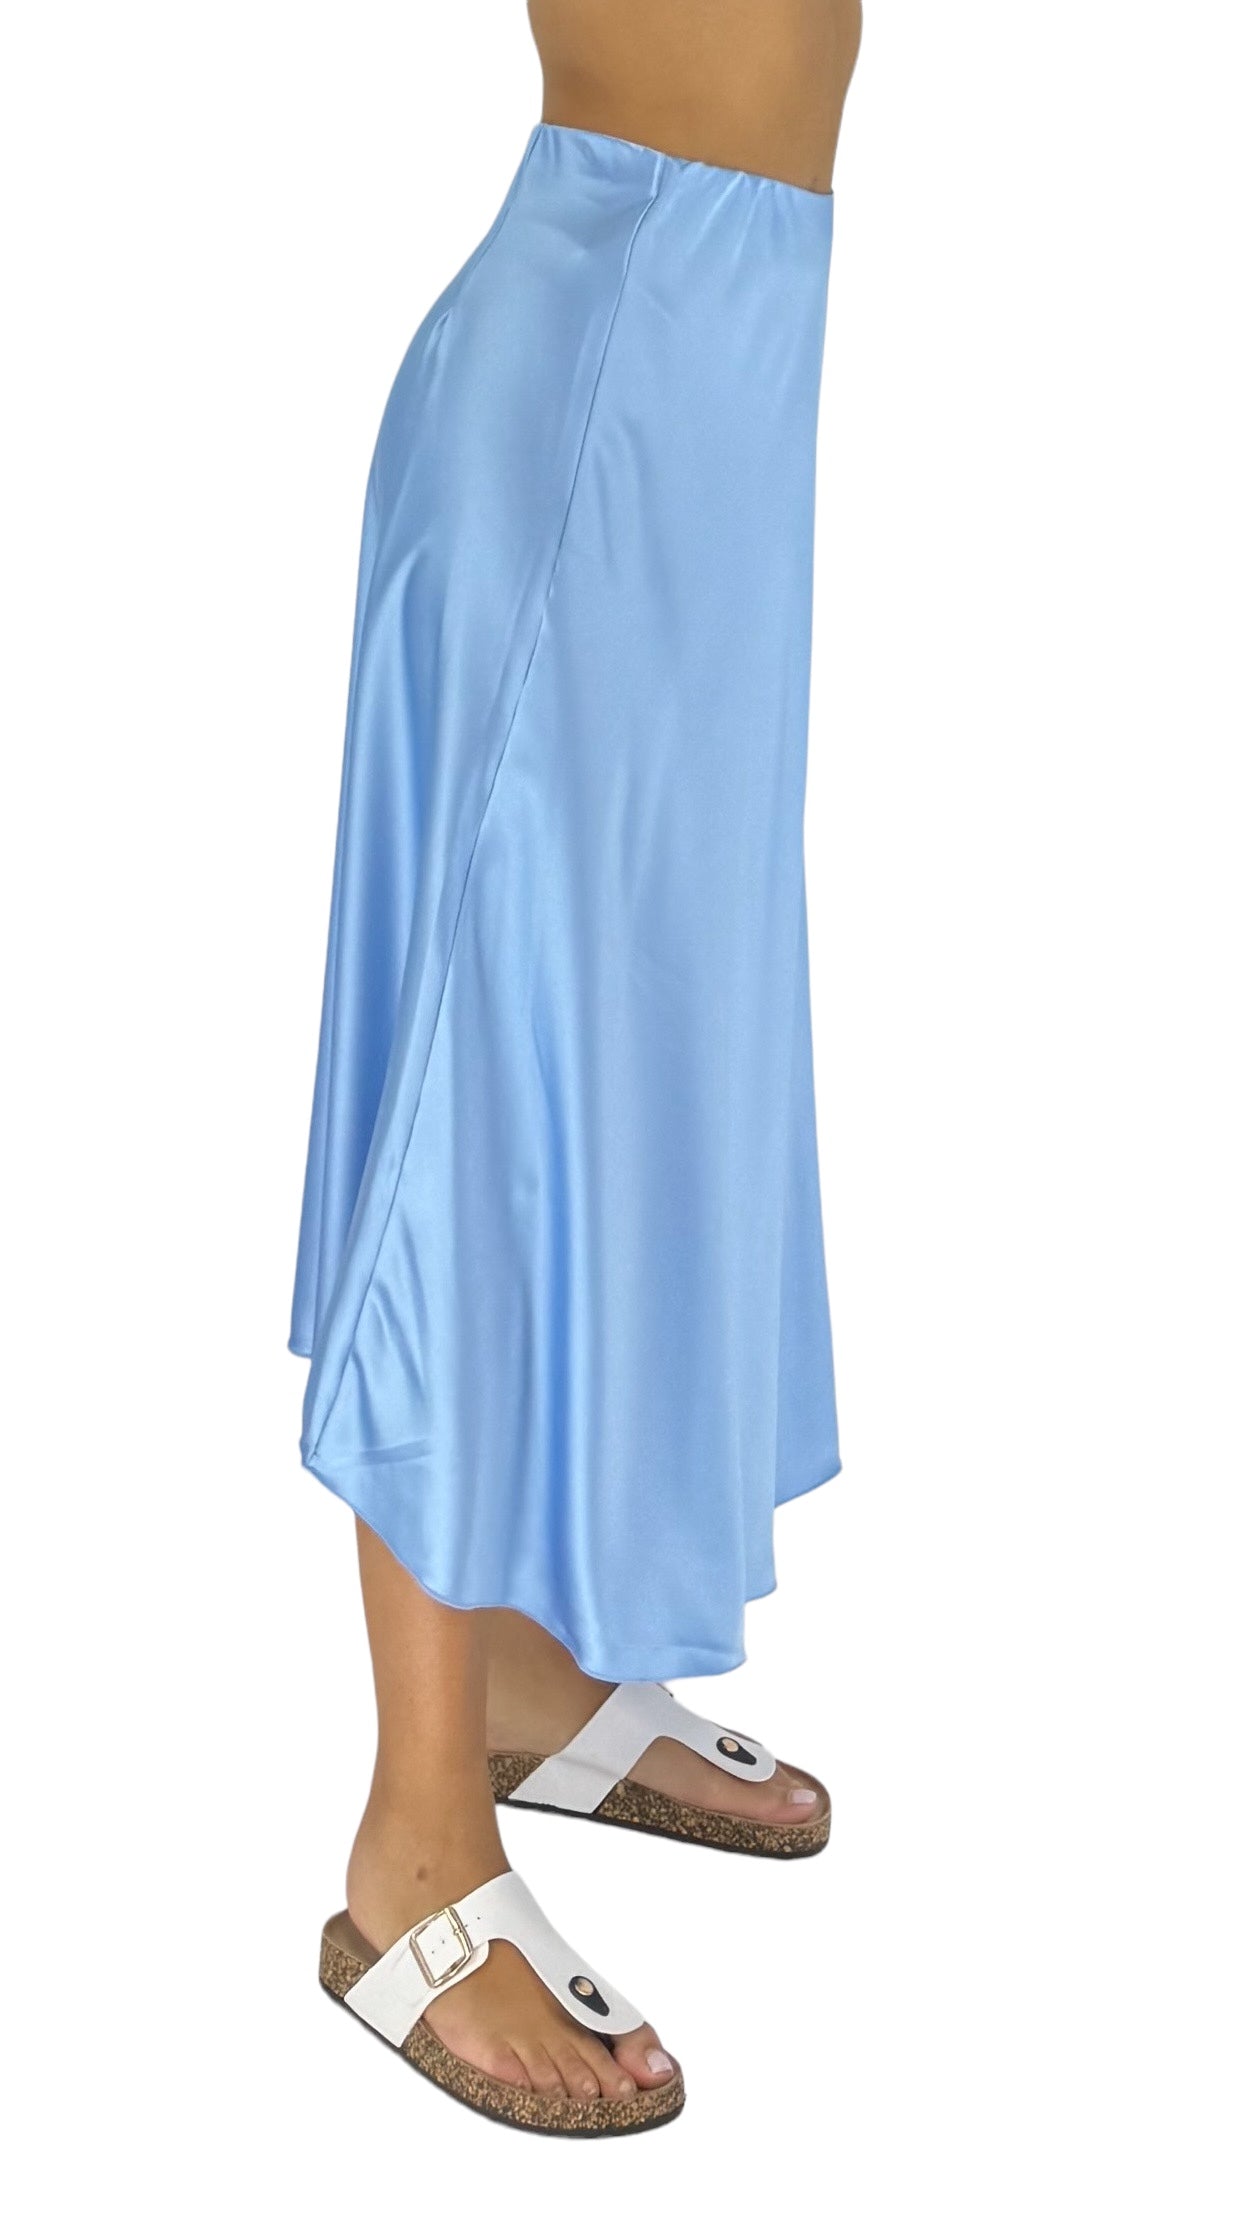 Roxy blue skirt